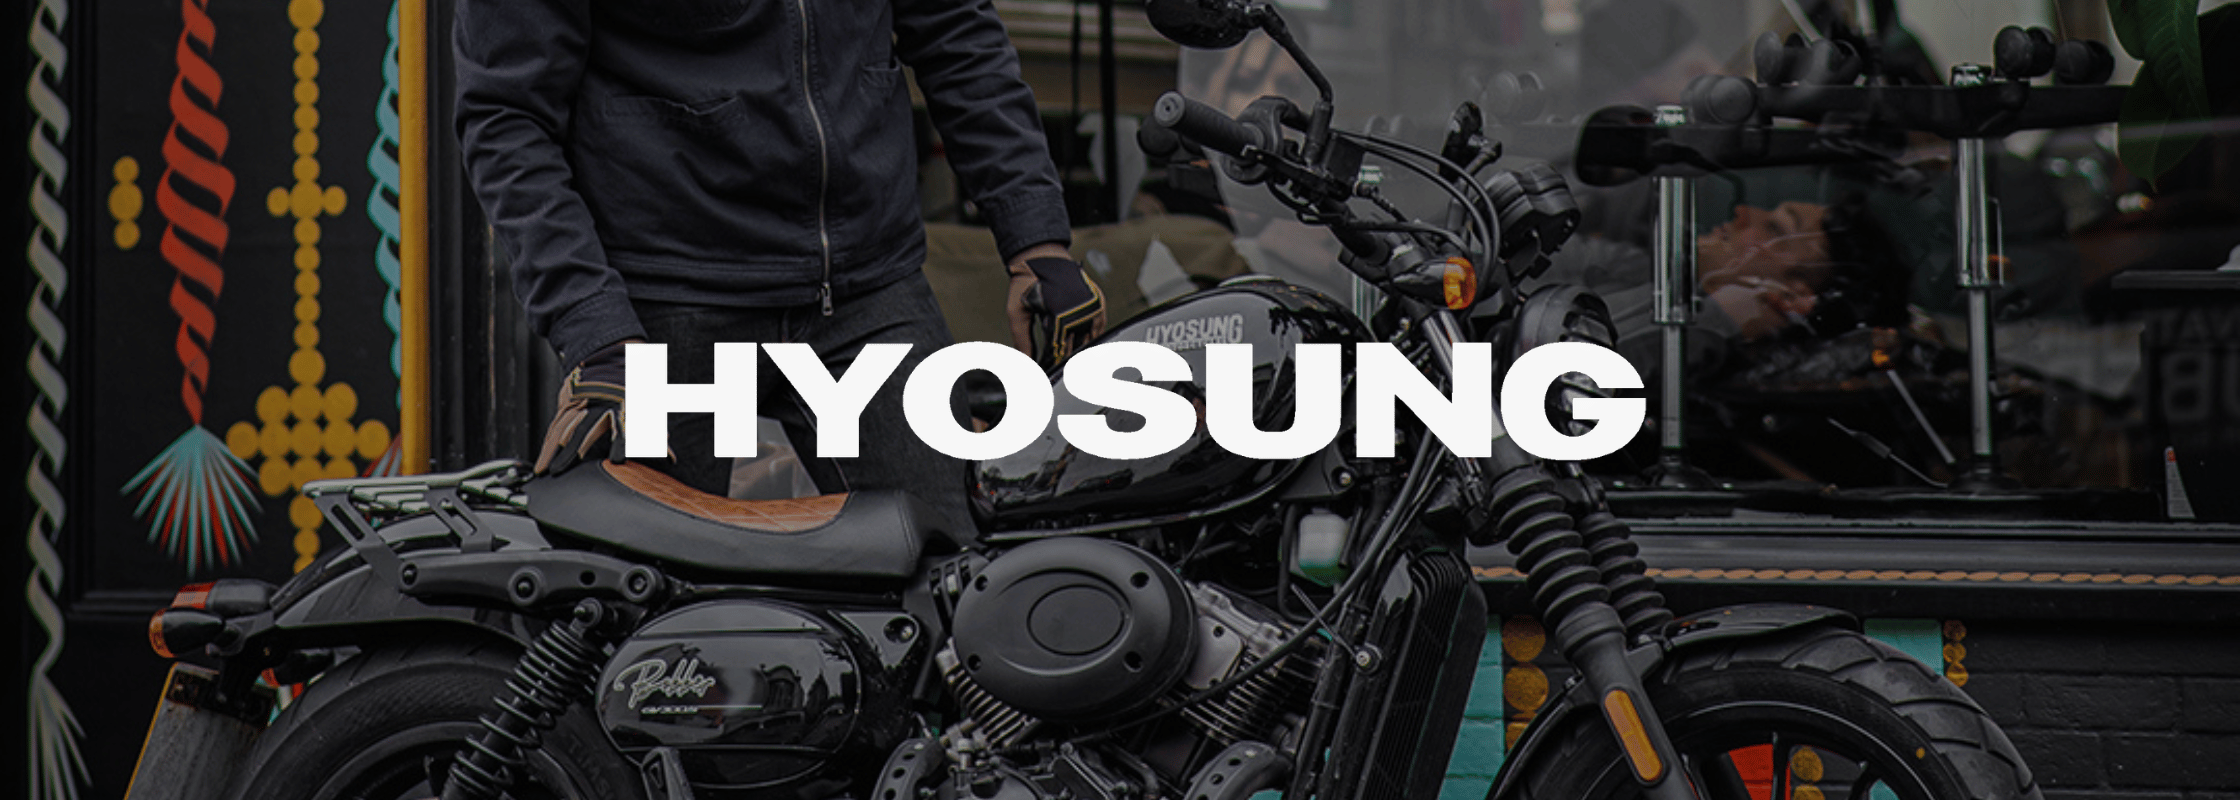 Hyosung Motorcycles